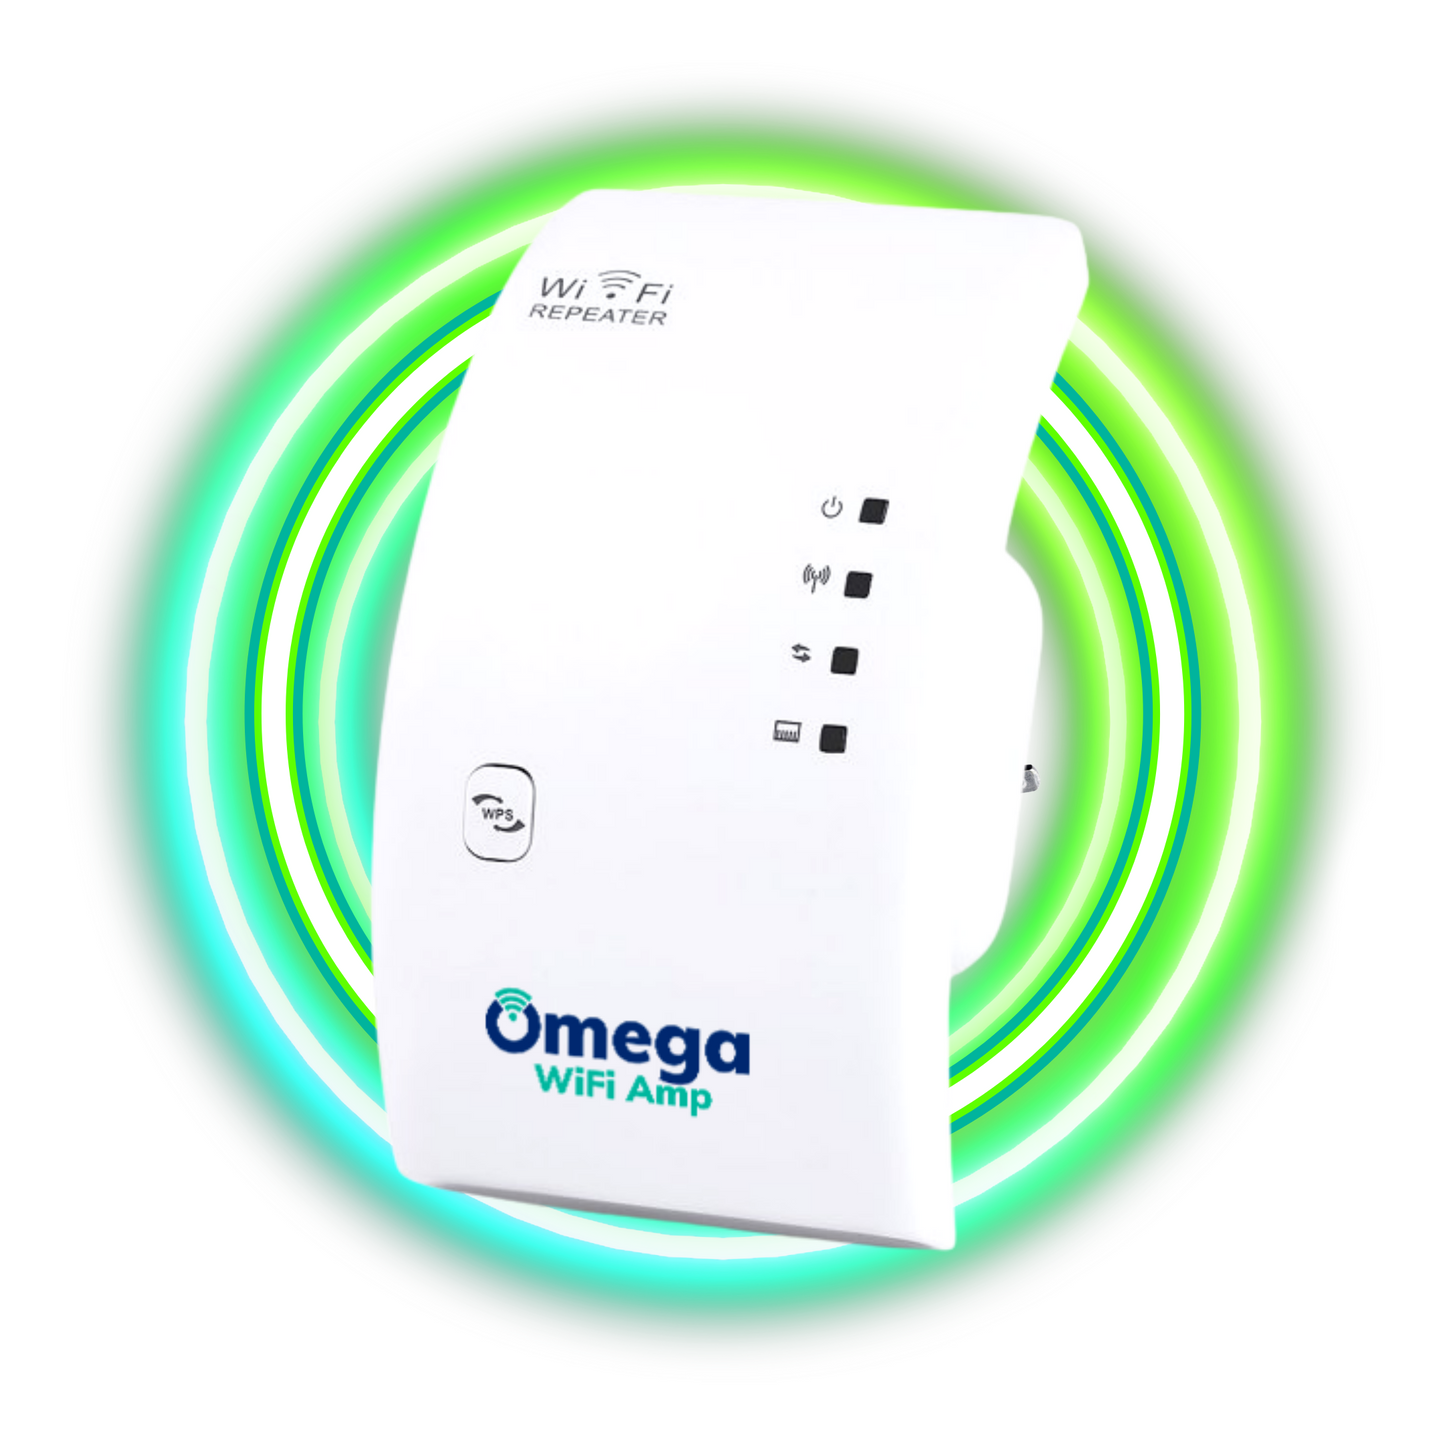 Omega WiFi Amp - WiFi Extender & Booster